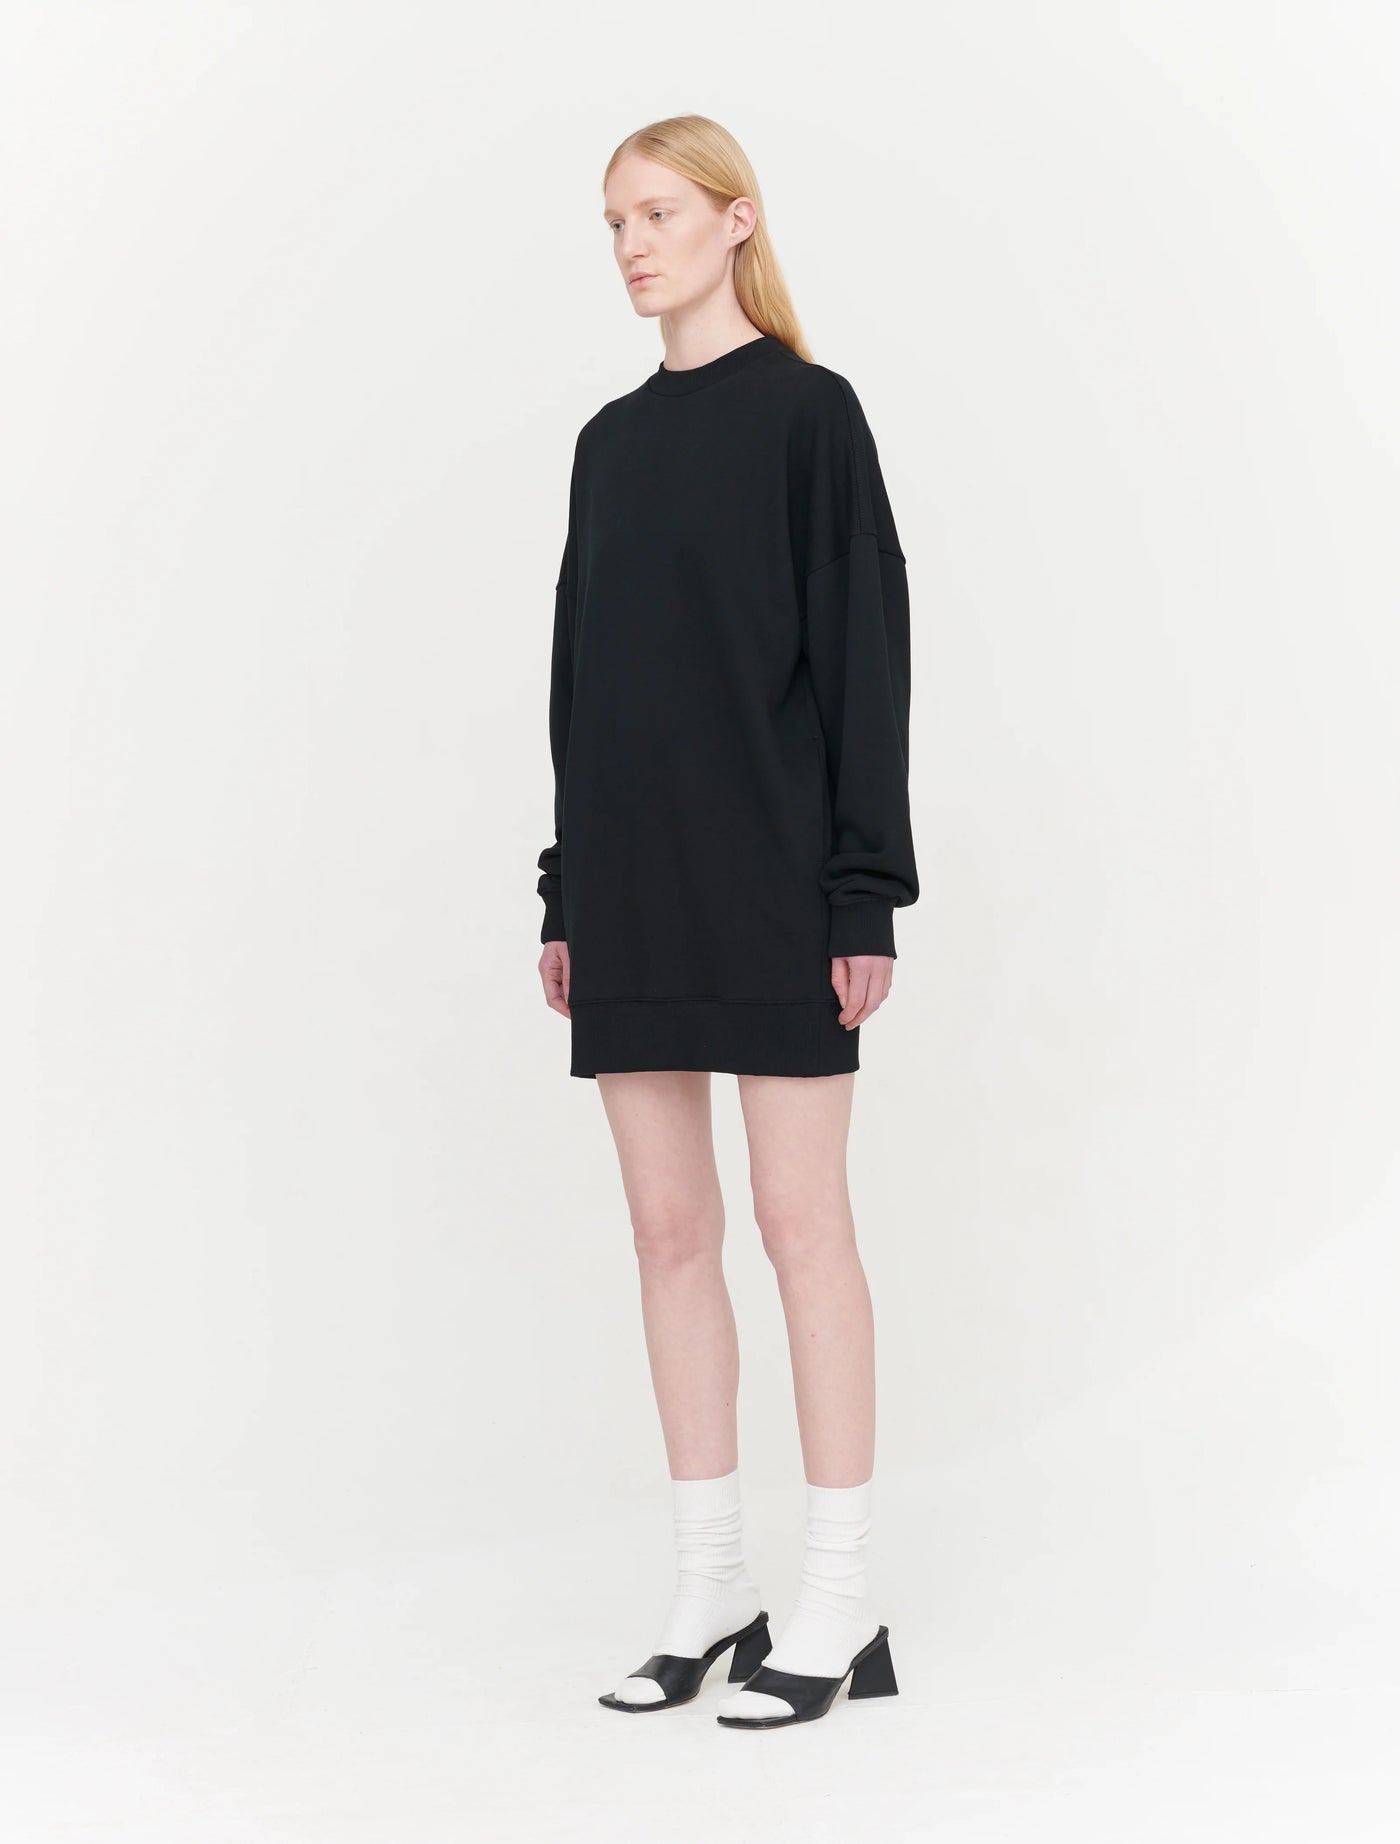 Black long Sweatshirt tops for women